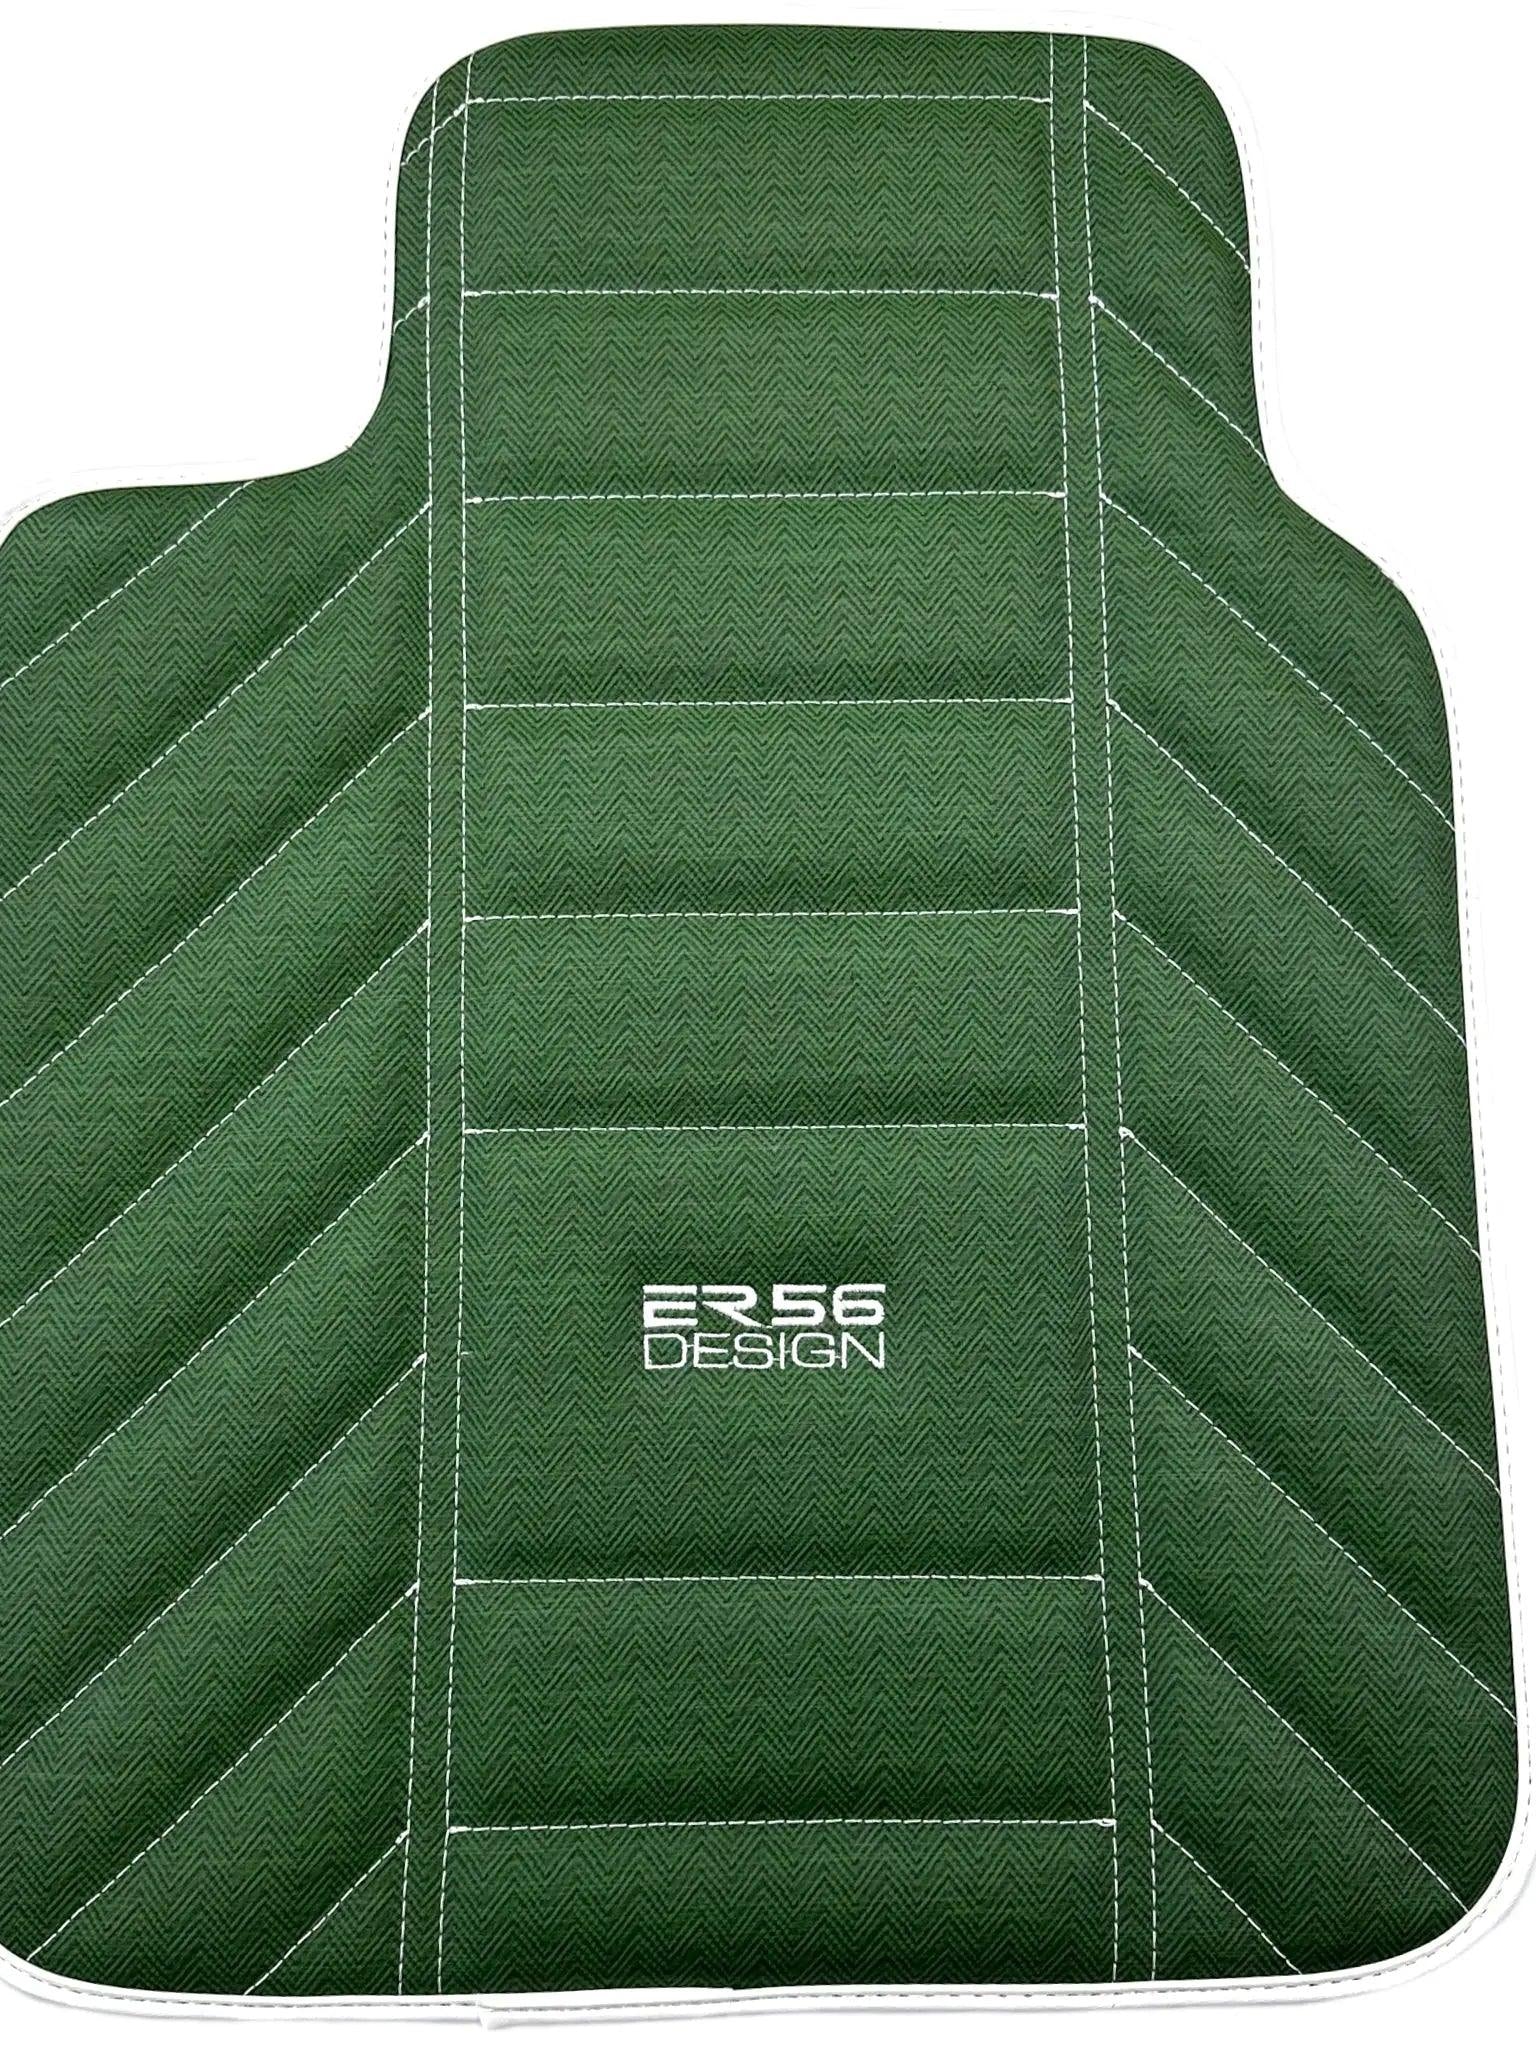 Green Leather Floor Mats For Rolls Royce Black Badge Phantom Drophead Coupe 20072016